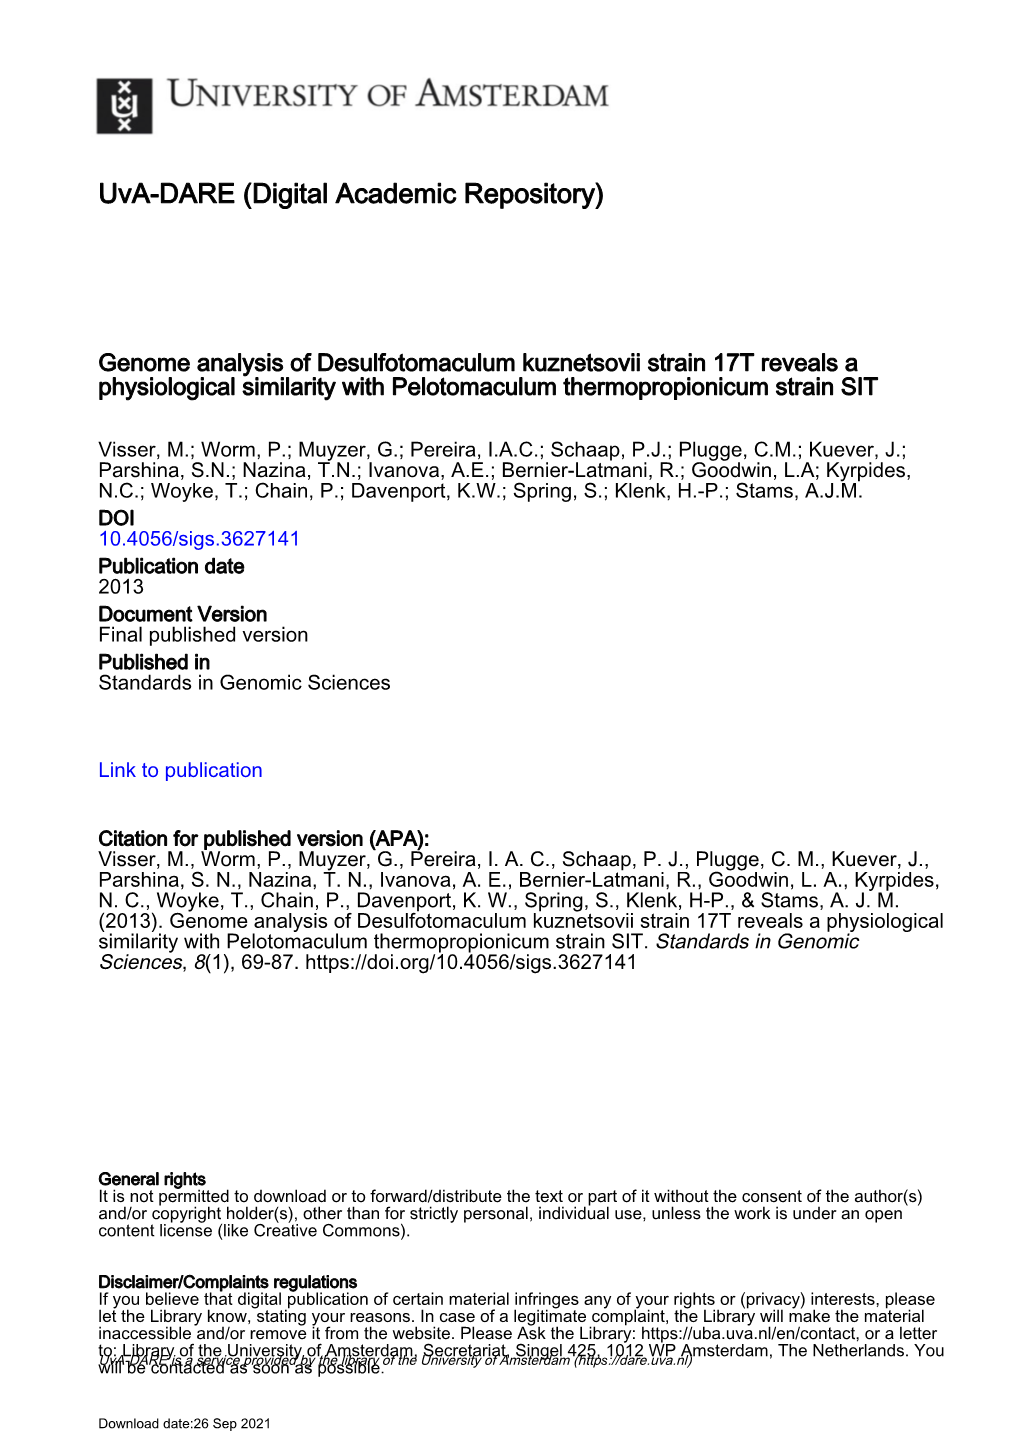 Desulfotomaculum Kuznetsovii Strain 17T Reveals a Physiological Similarity with Pelotomaculum Thermopropionicum Strain SIT